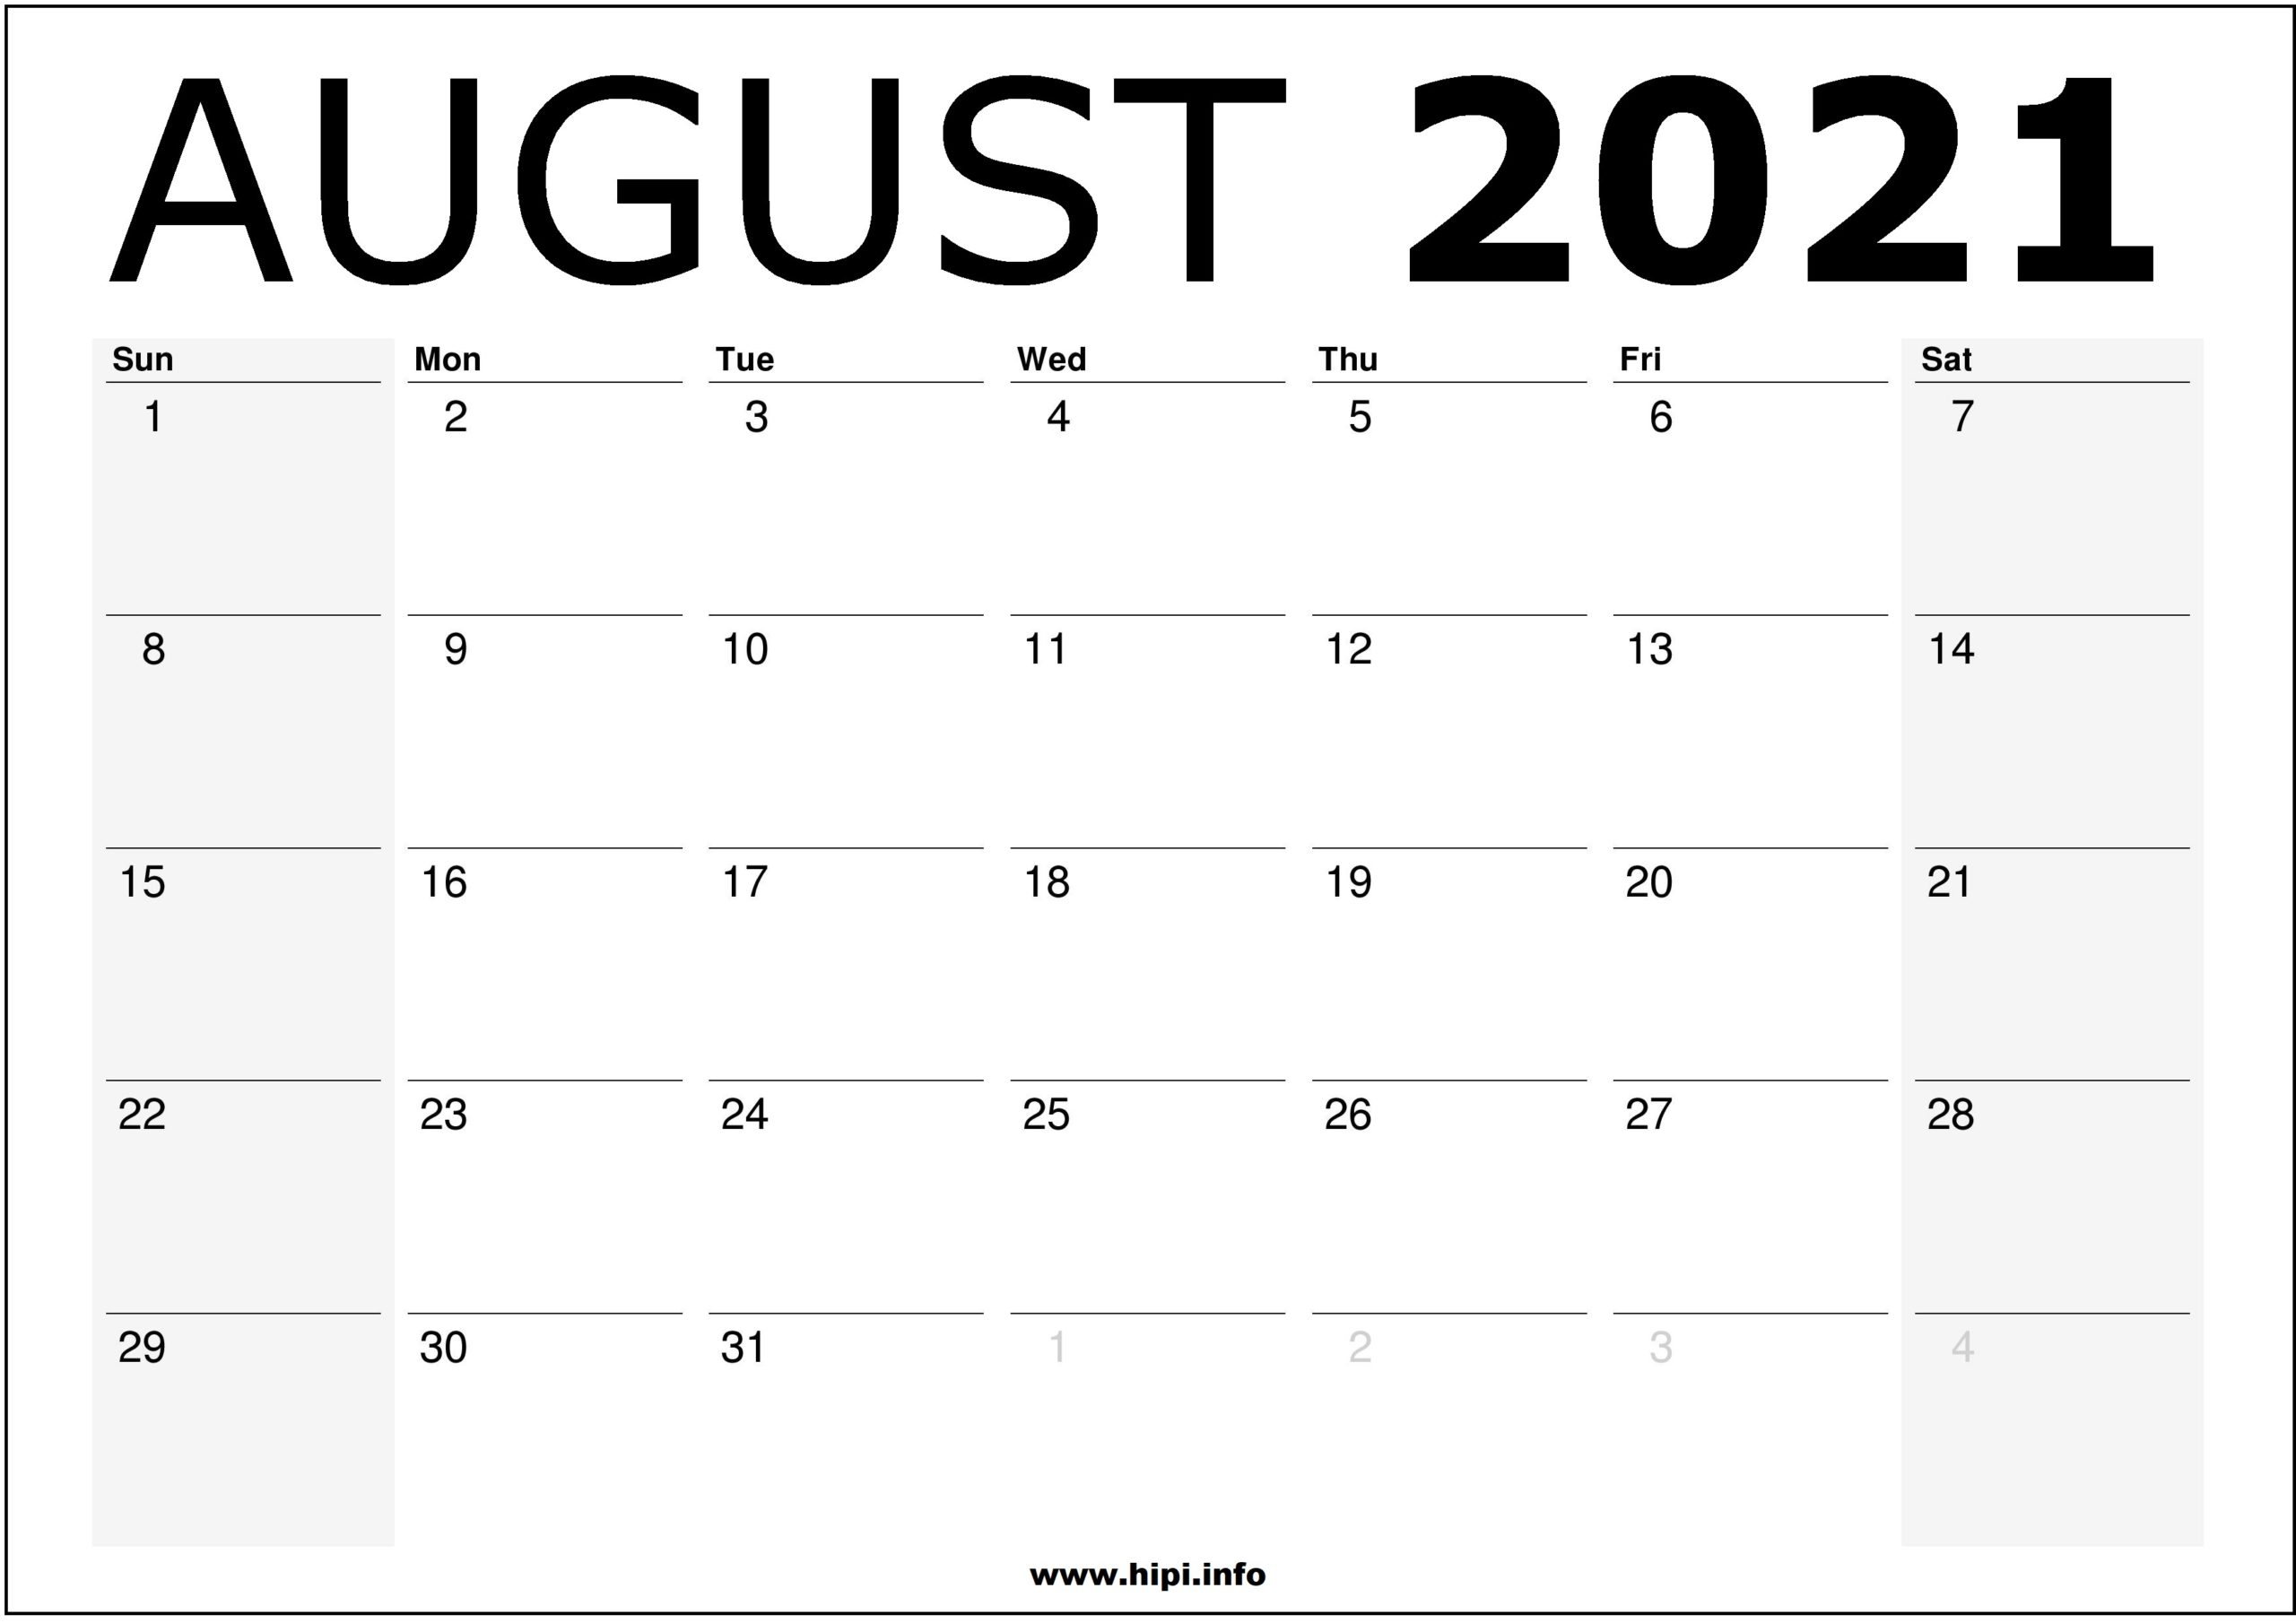 August 2021 Calendar Printable - Monthly Calendar Free